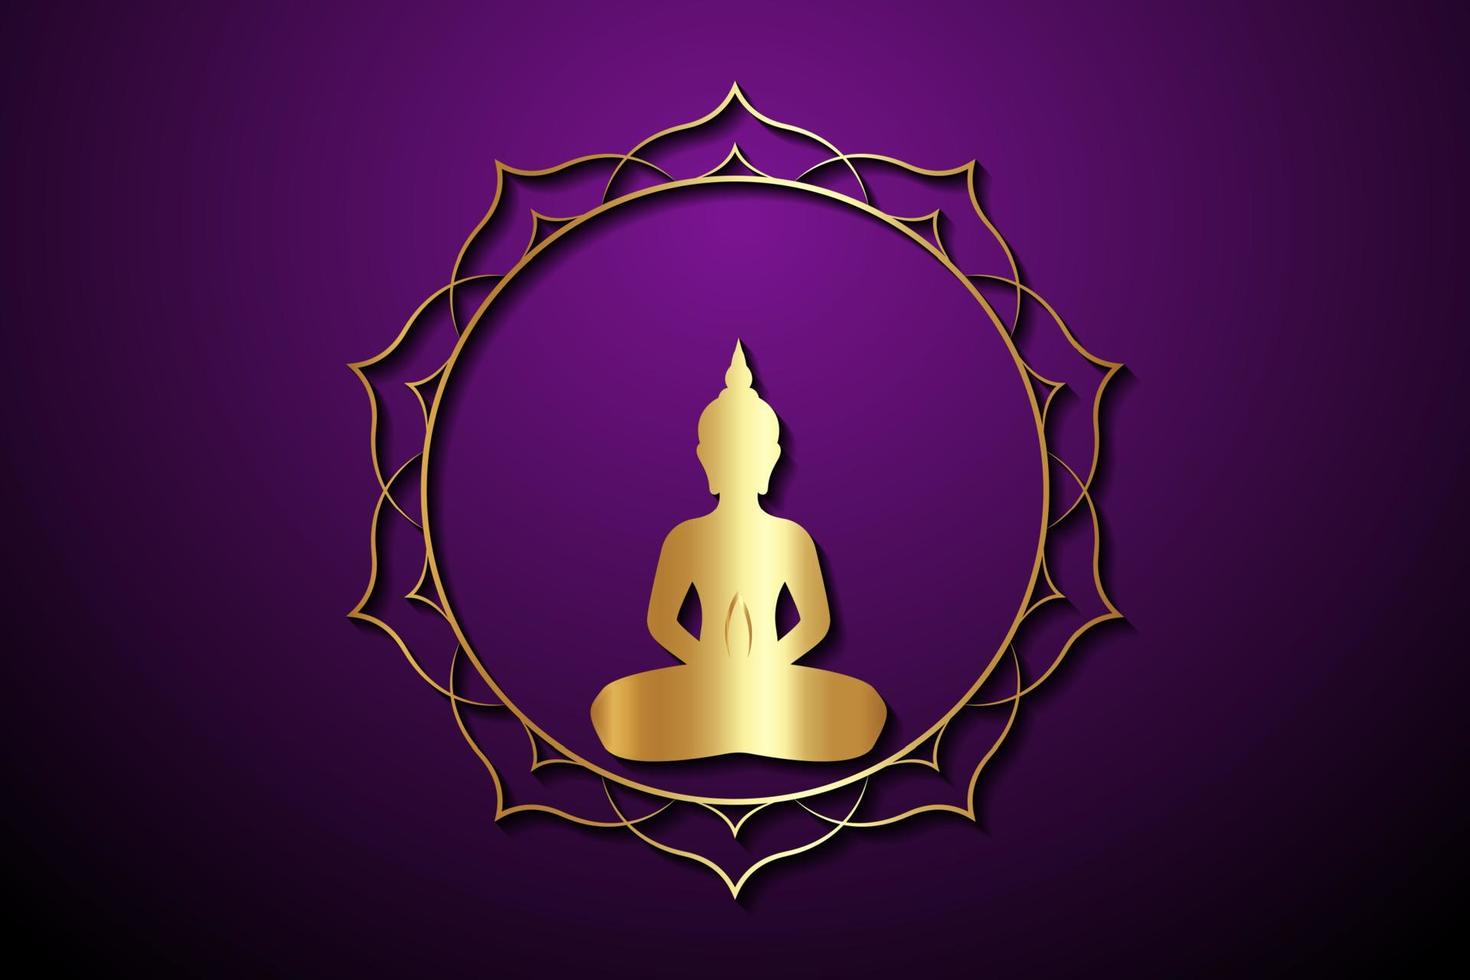 silueta de buda de oro en posición de loto, plantilla de logotipo redondo de loto sagrado. budismo motivos esotéricos, yoga espiritual. vector de mandala dorado aislado sobre fondo morado